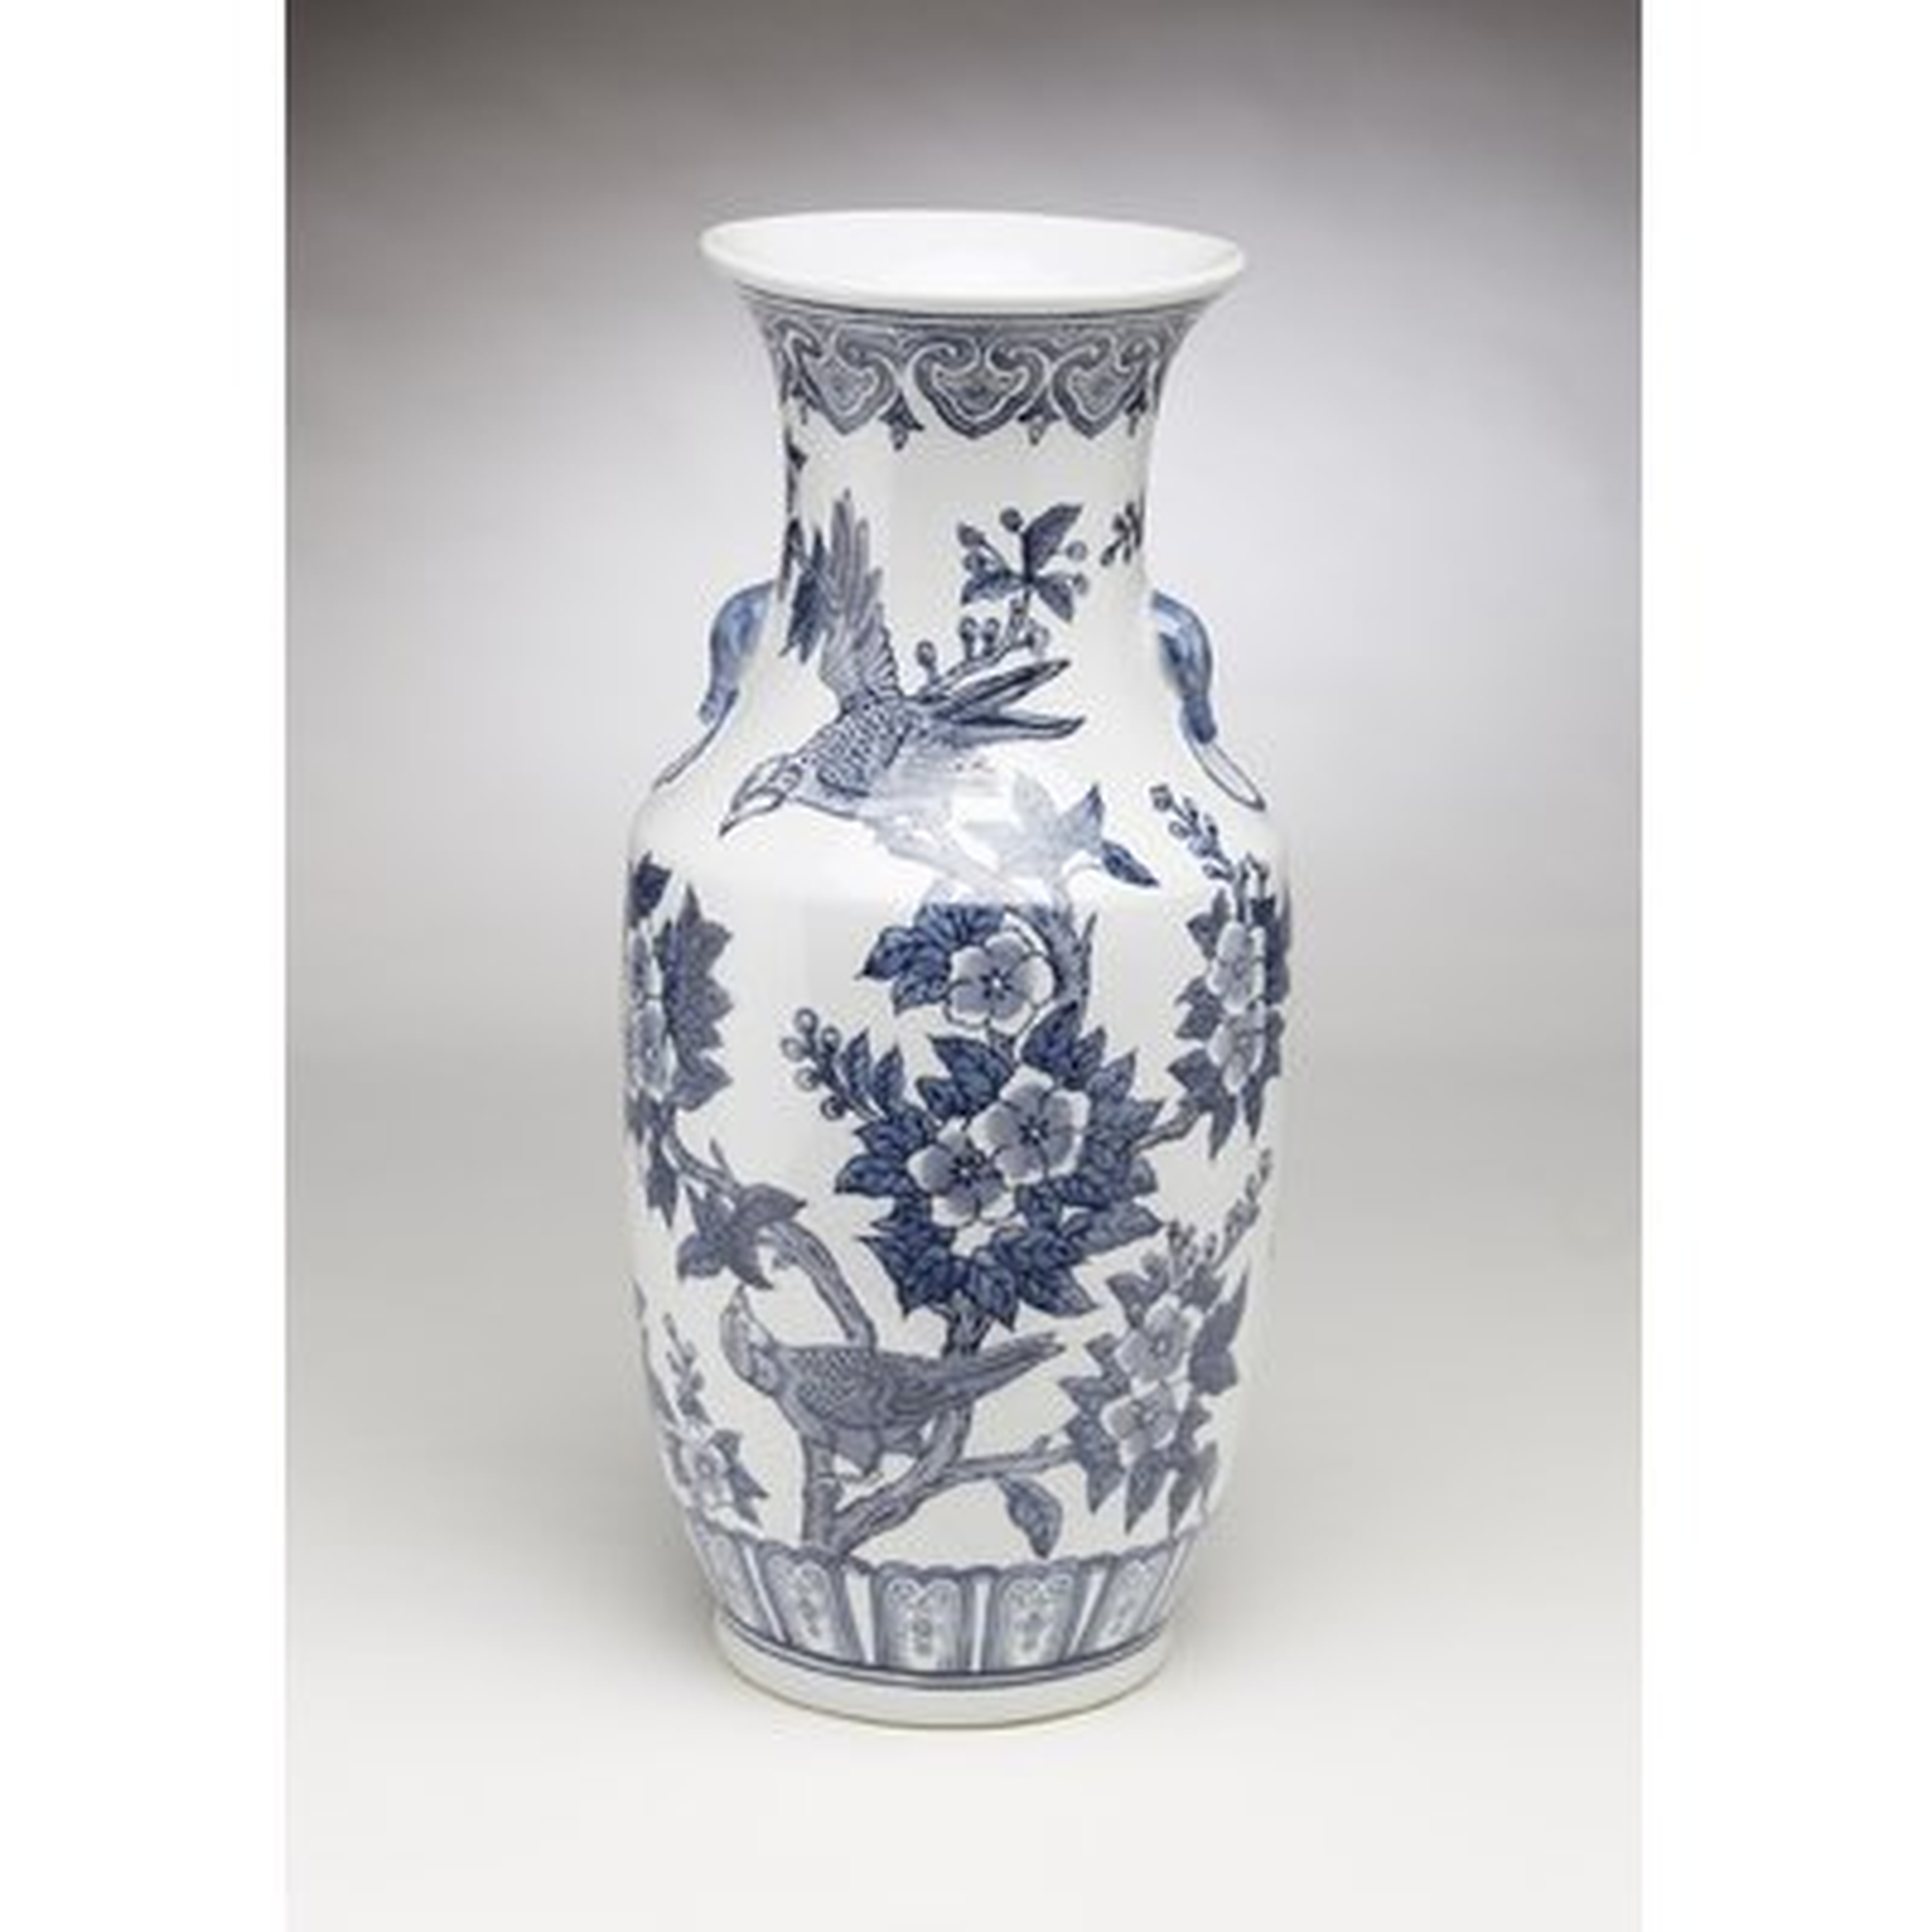 Hocking Bird and Floral Table Vase - Wayfair